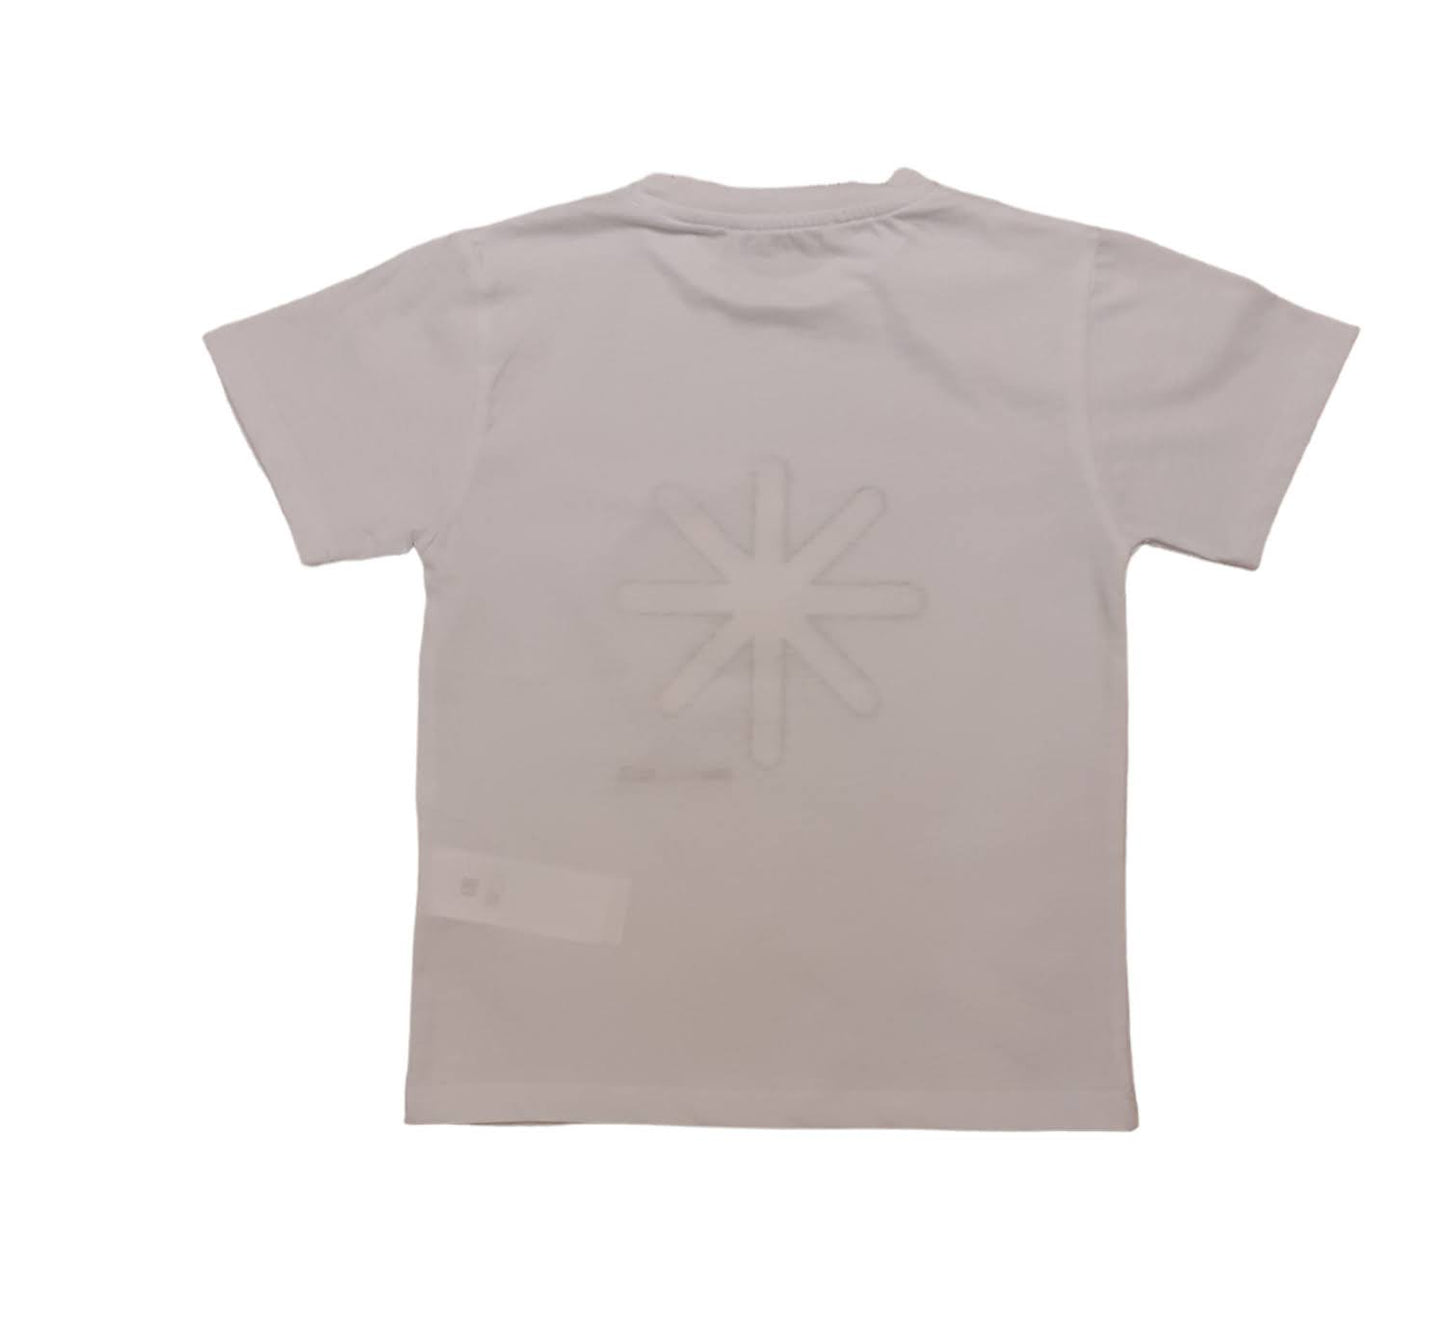 MANUEL RITZ White-orange cotton t-shirt